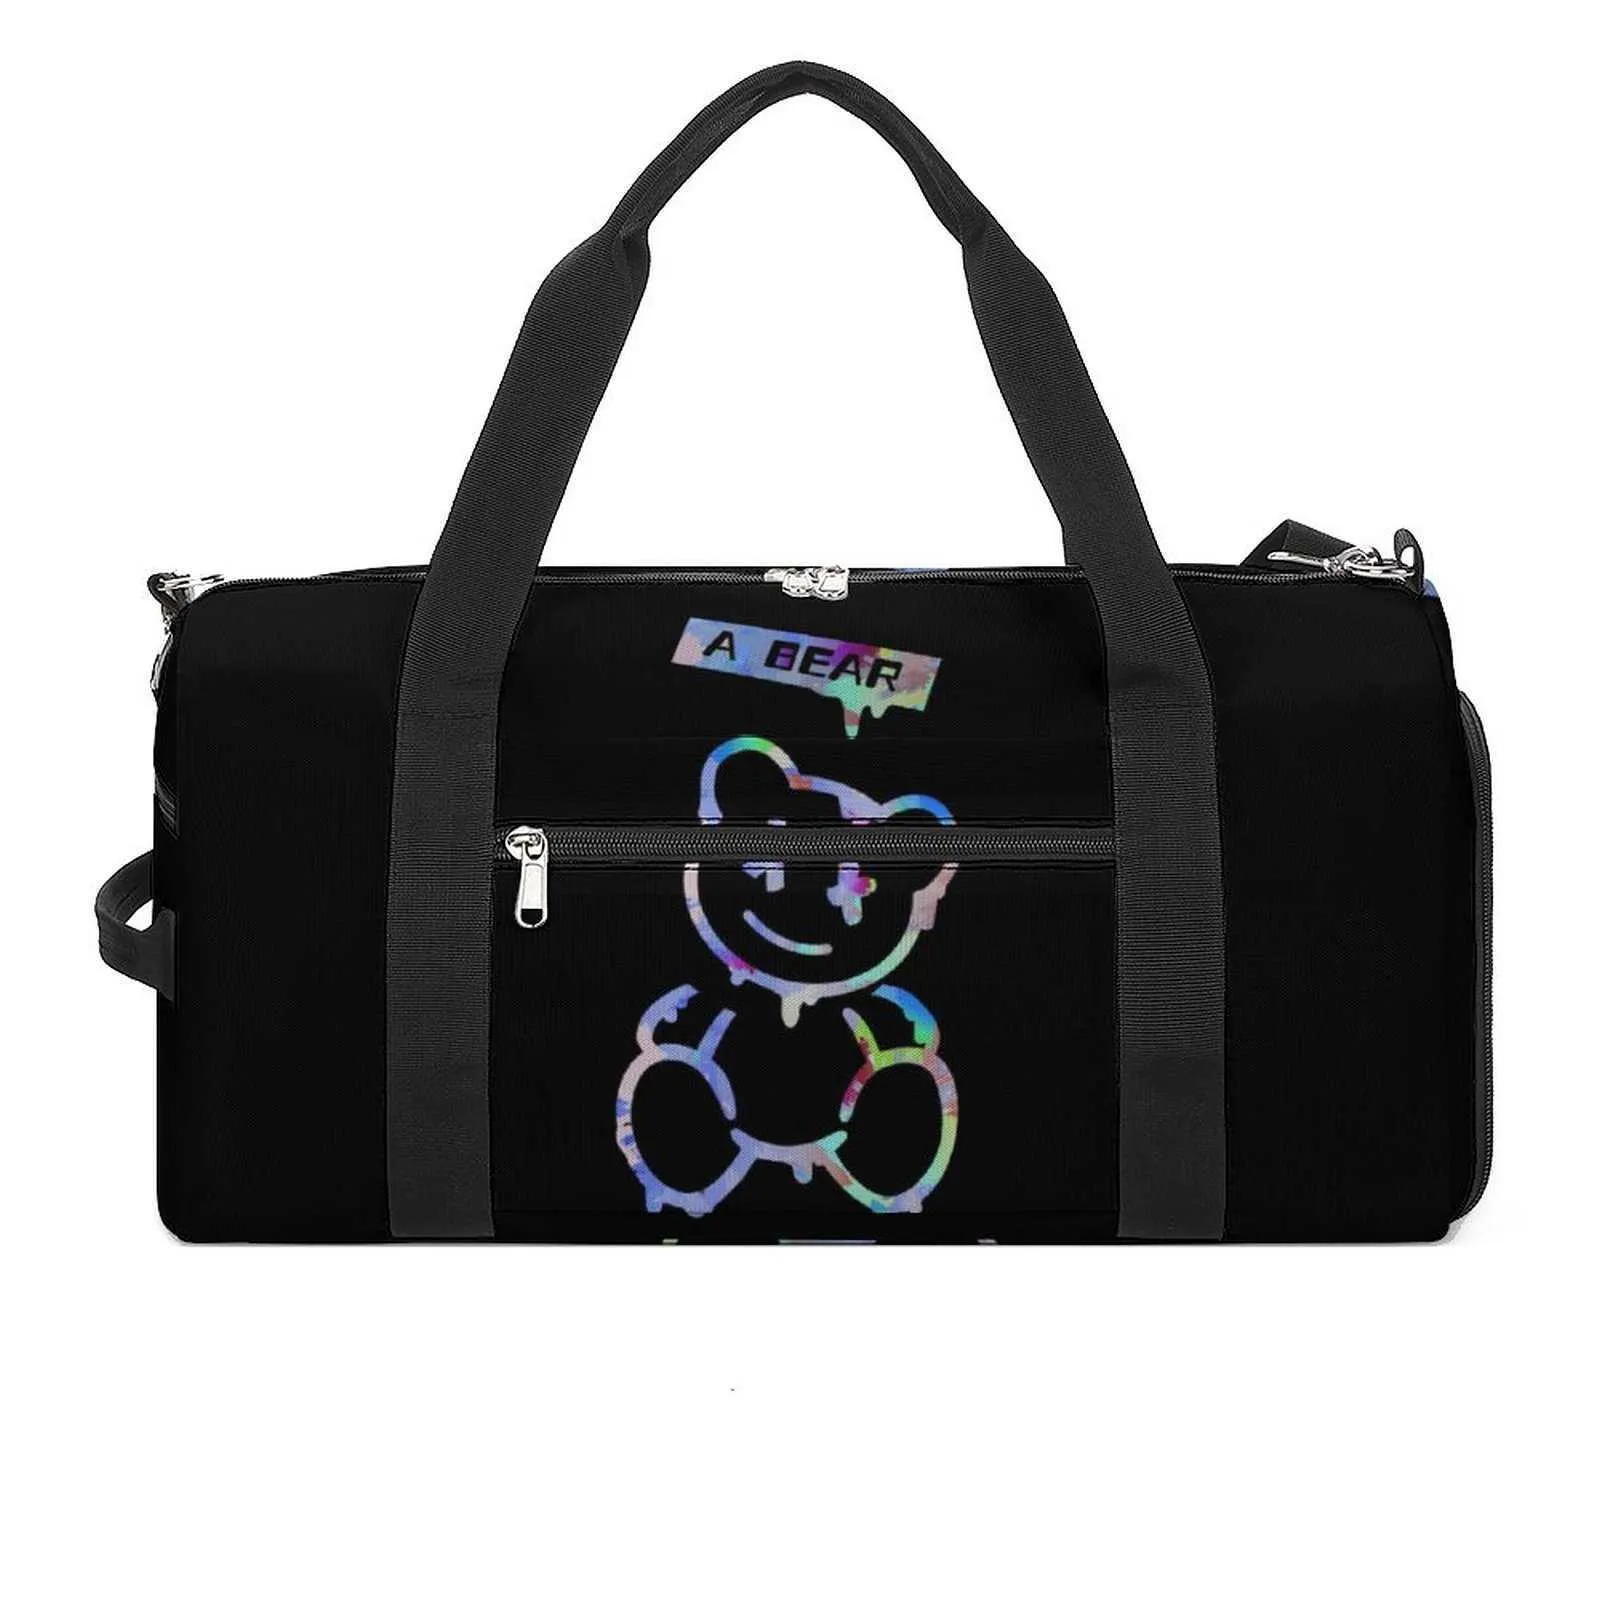 Outdoor Bags A Bear Sports Bag Graffiti Abstract Design Men Weekend Gym Bags Gym Accessories Fitness Handbags T230129